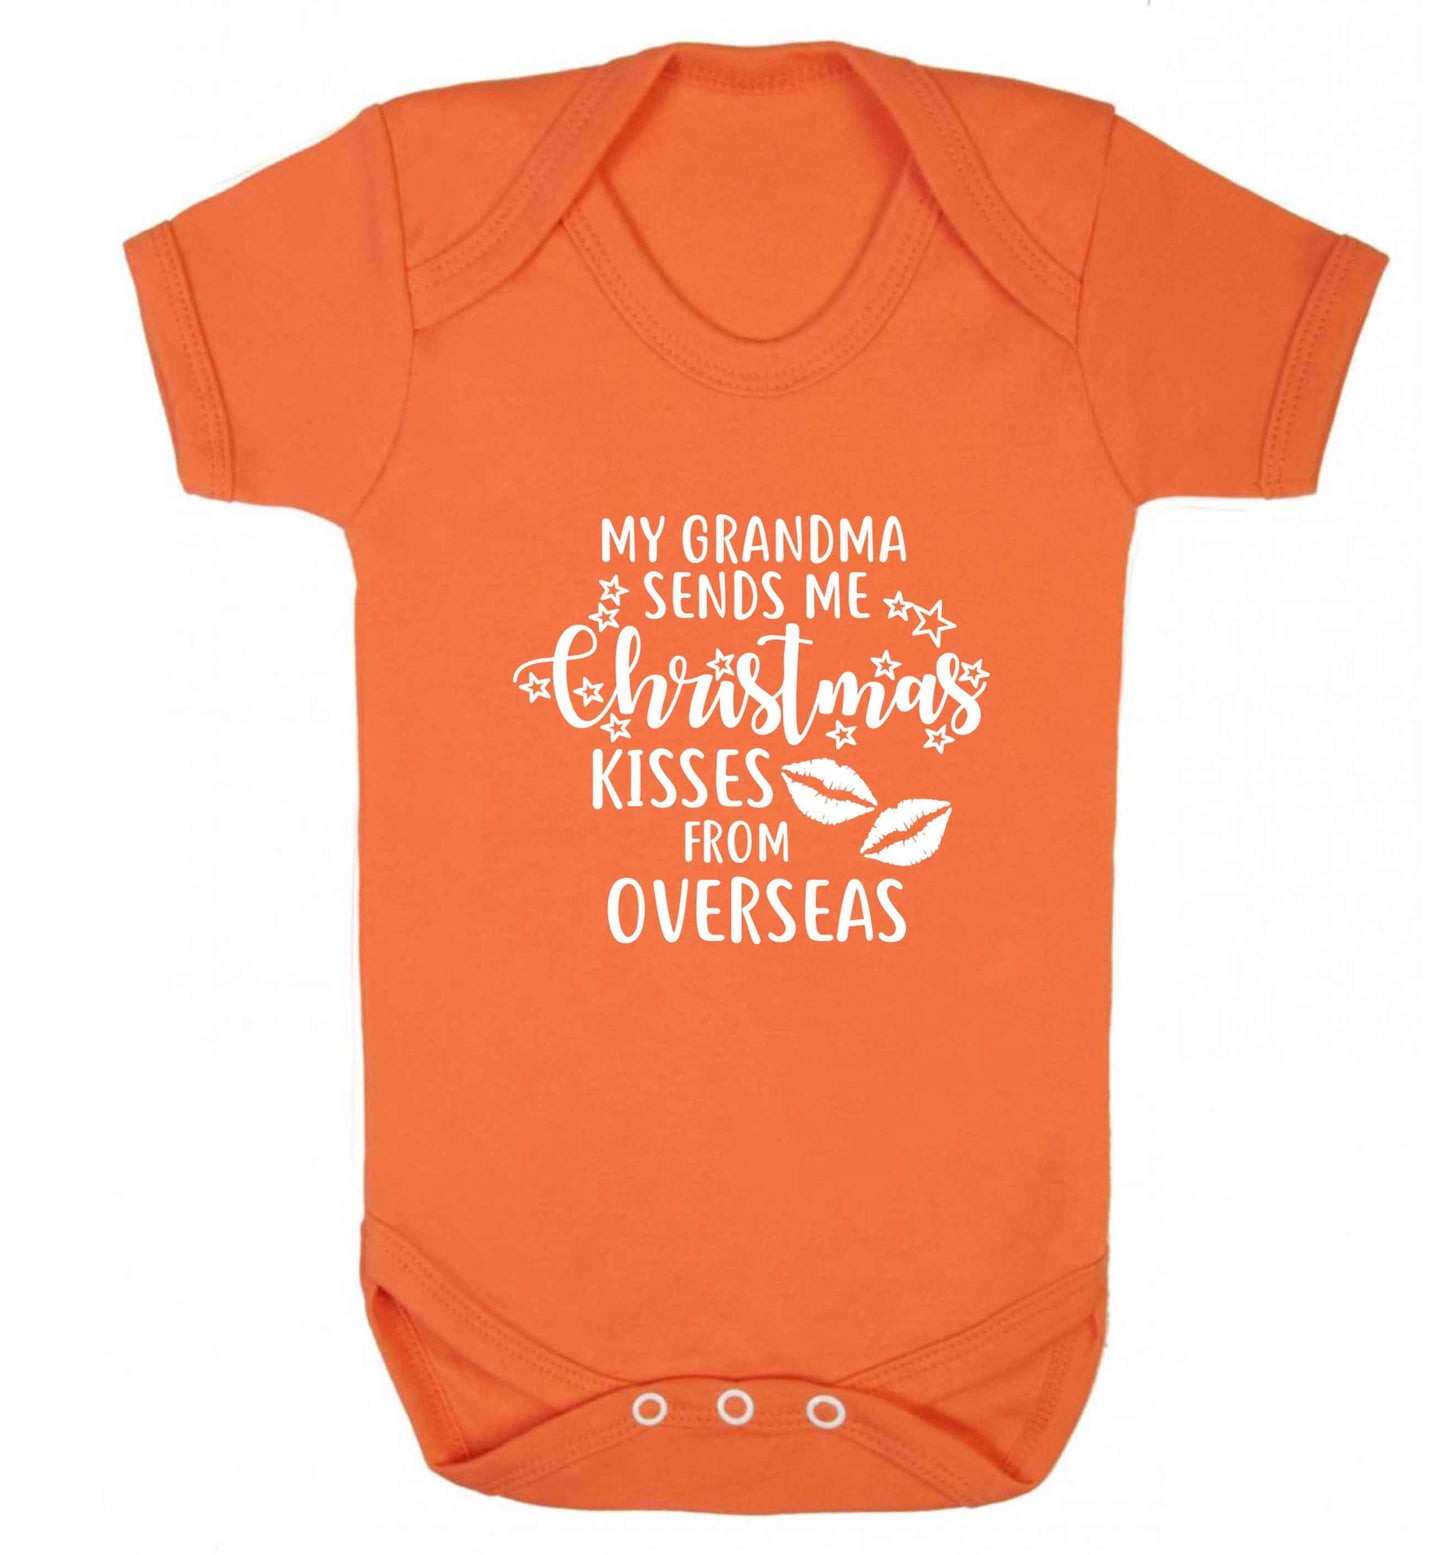 Grandma Christmas Kisses Overseas baby vest orange 18-24 months